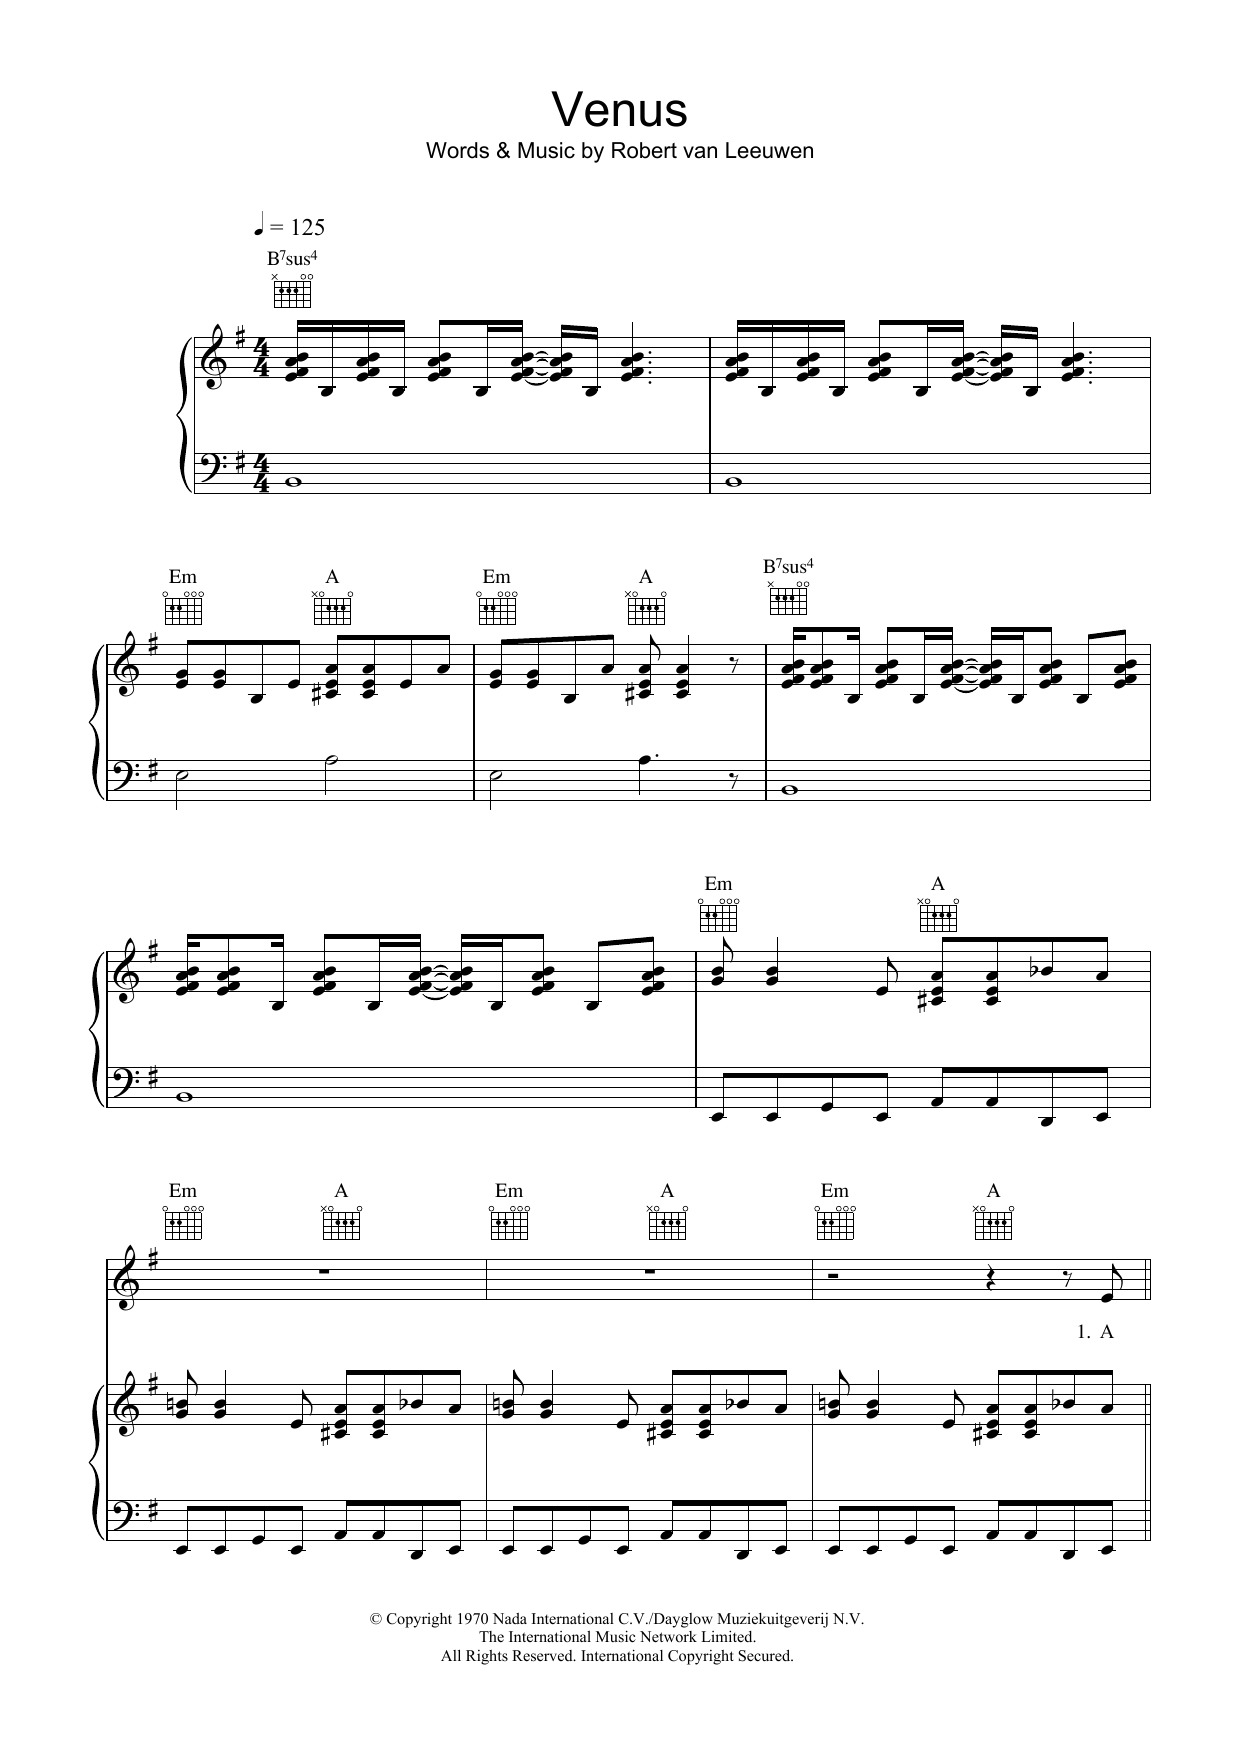 Bananarama Venus Sheet Music Notes & Chords for Piano, Vocal & Guitar - Download or Print PDF